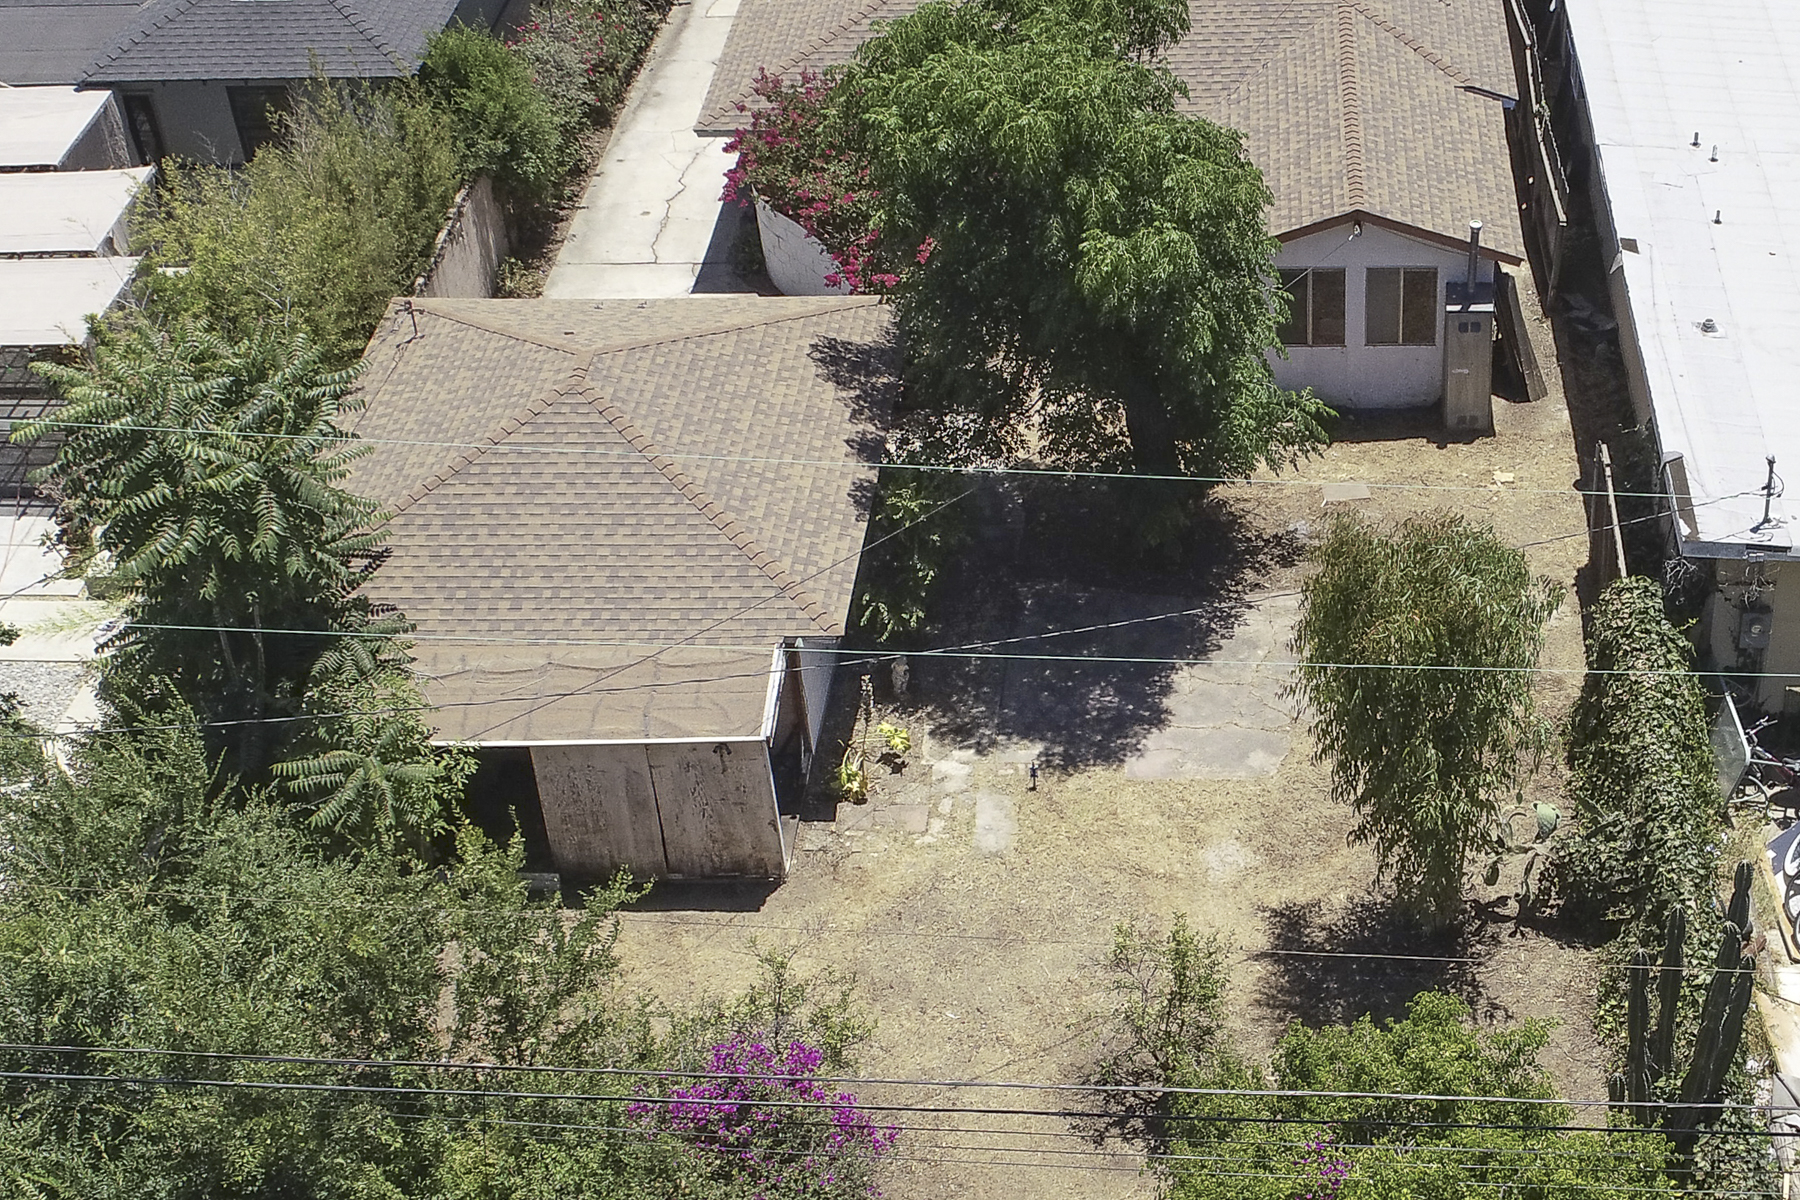 319 E. Francis Ave, La Habra, CA 90631: Aerial view, backyard and detached garage.